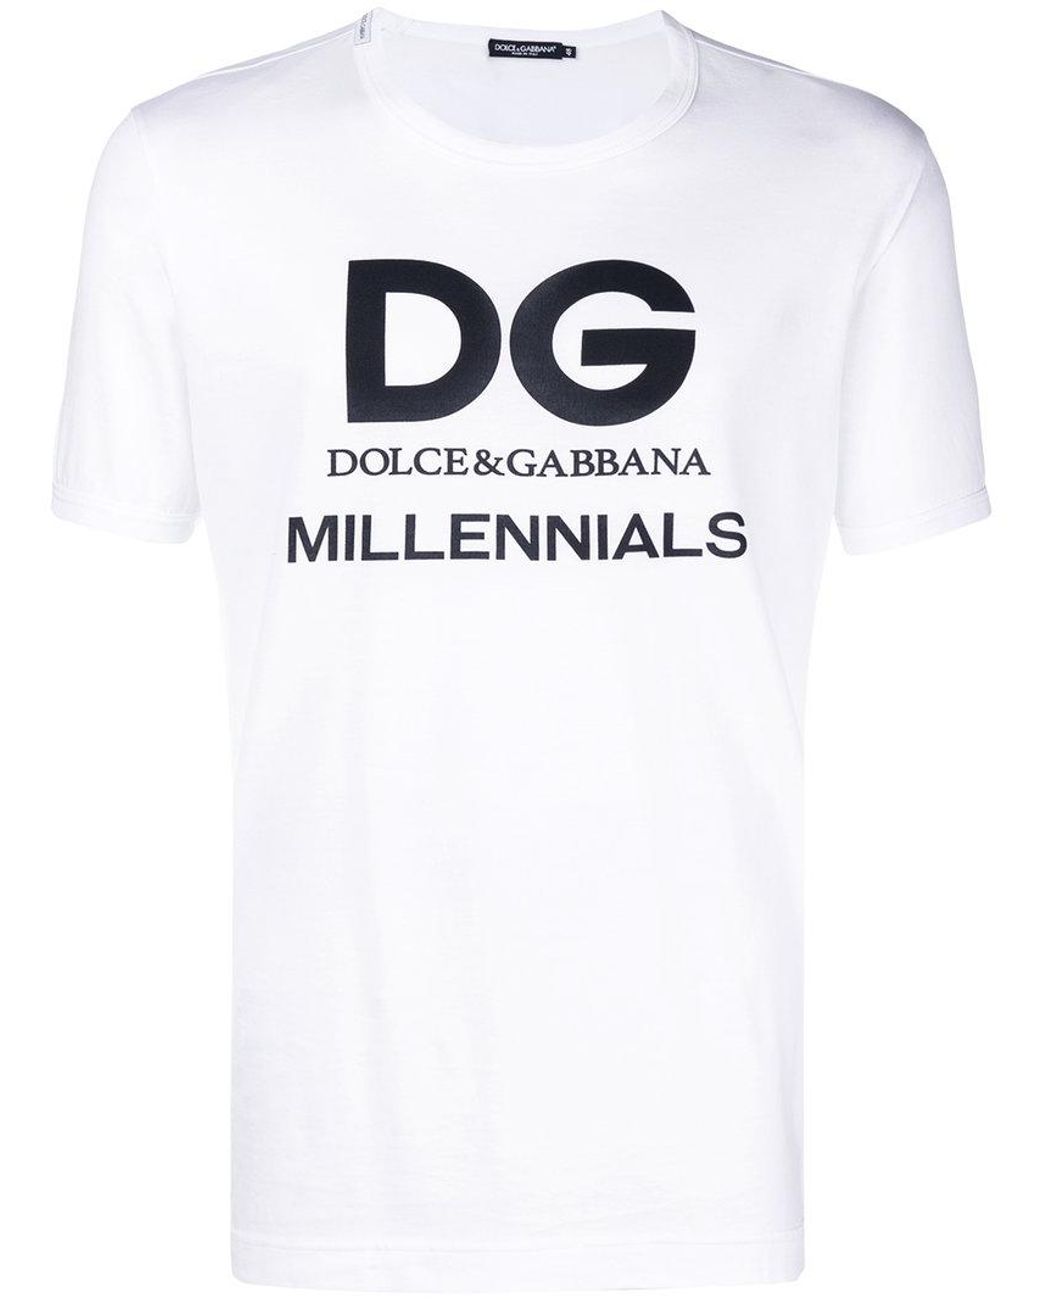 Dolce & Gabbana Dg Millennials T-shirt in White for Men | Lyst